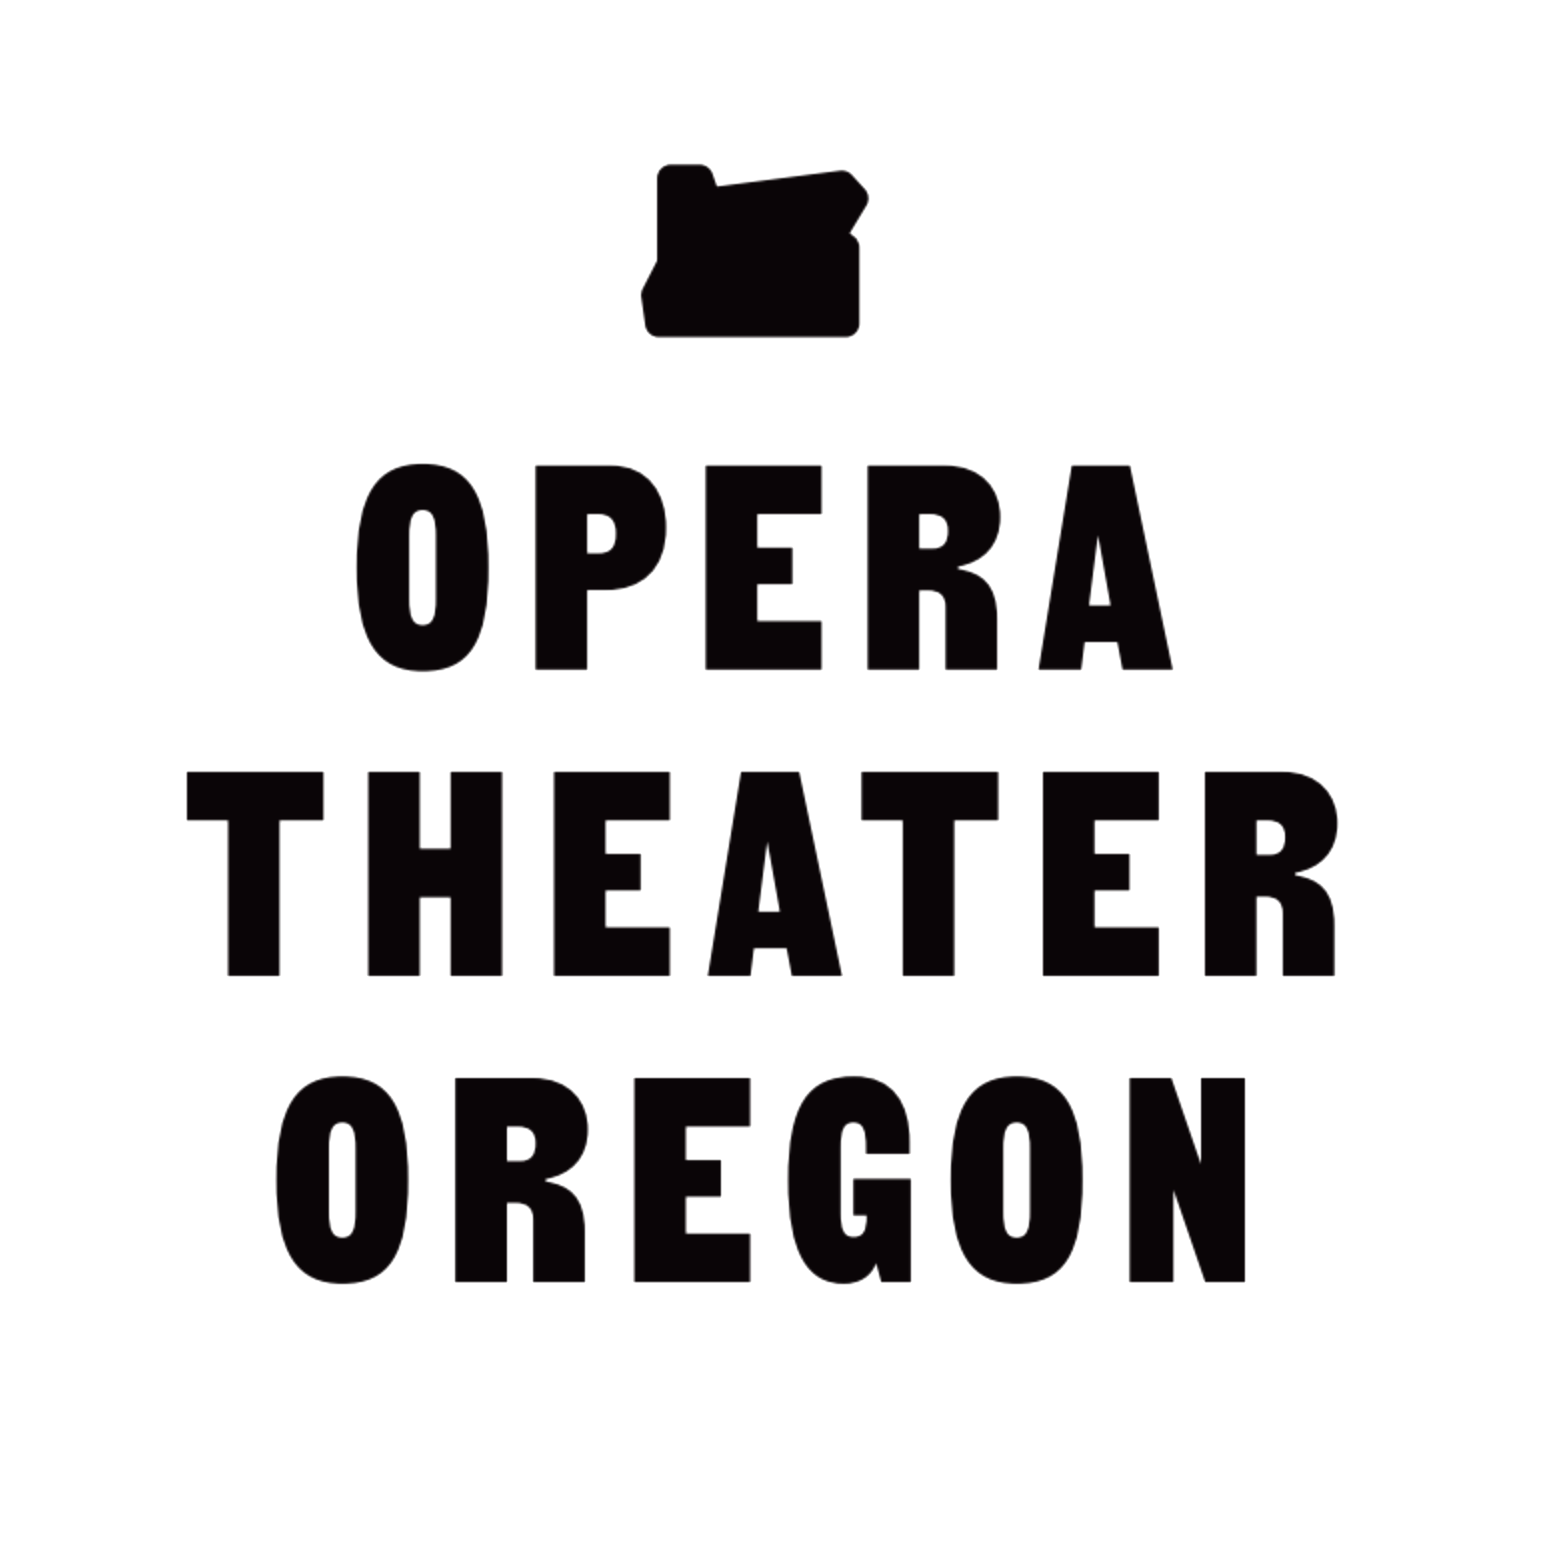 Opera Theater Oregon